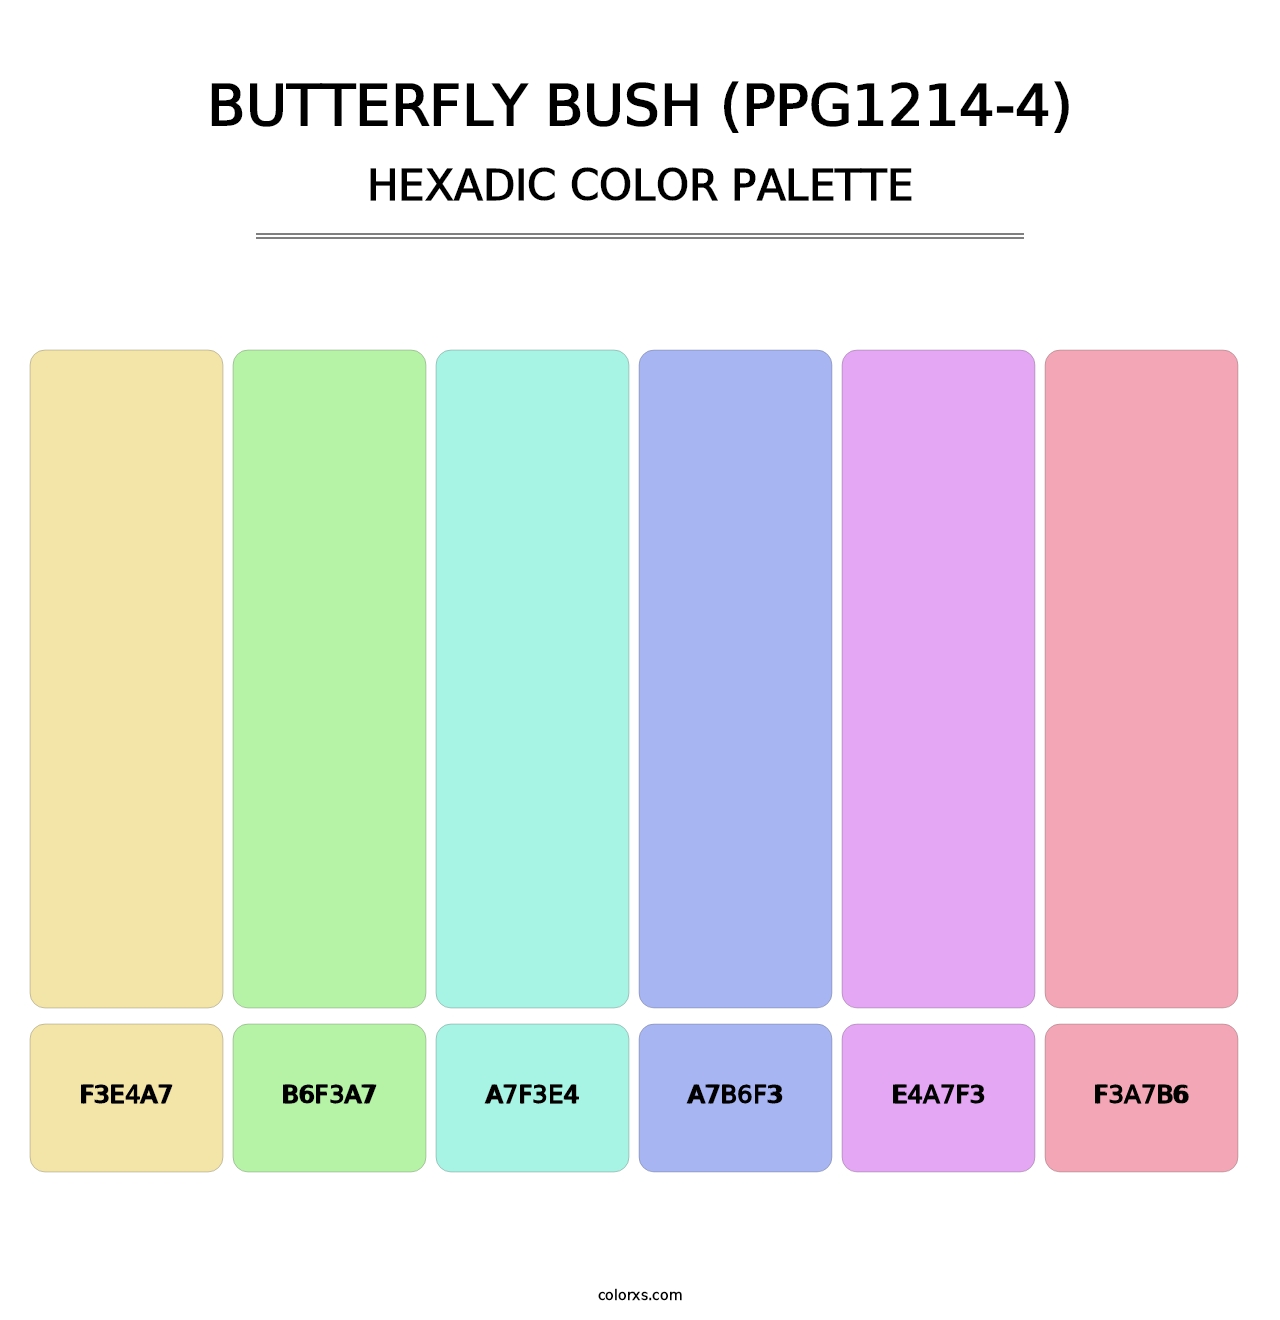 Butterfly Bush (PPG1214-4) - Hexadic Color Palette